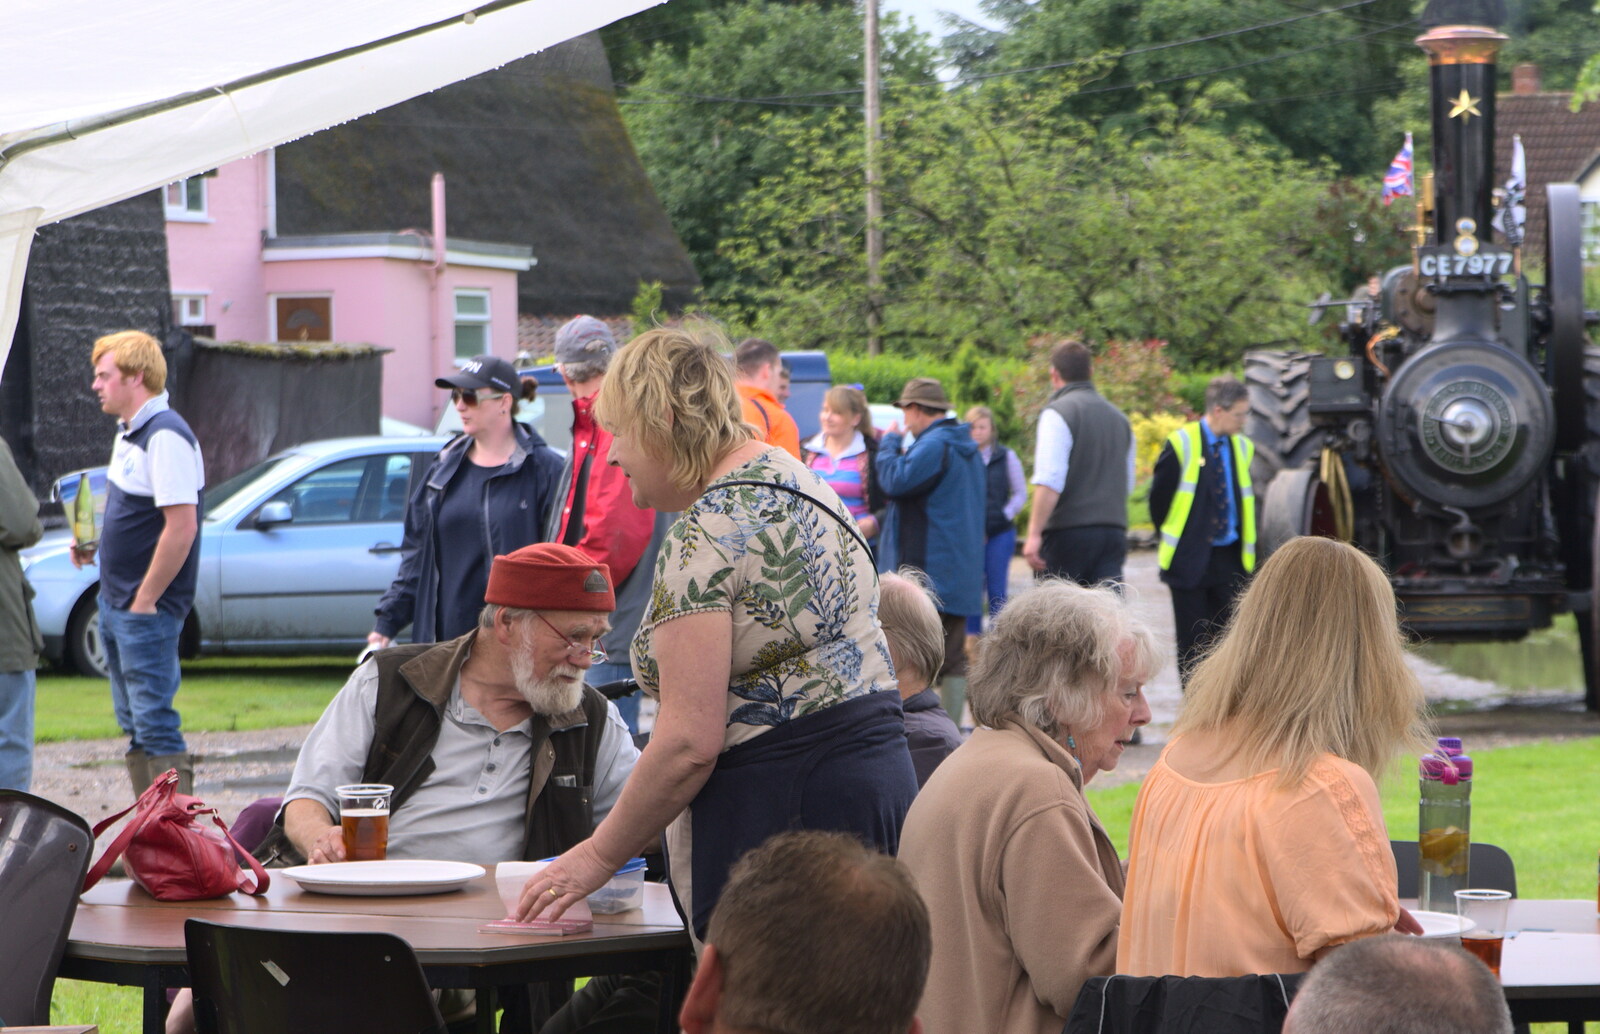 Mingling crowds from Thrandeston Pig, Little Green, Thrandeston, Suffolk - 26th June 2016